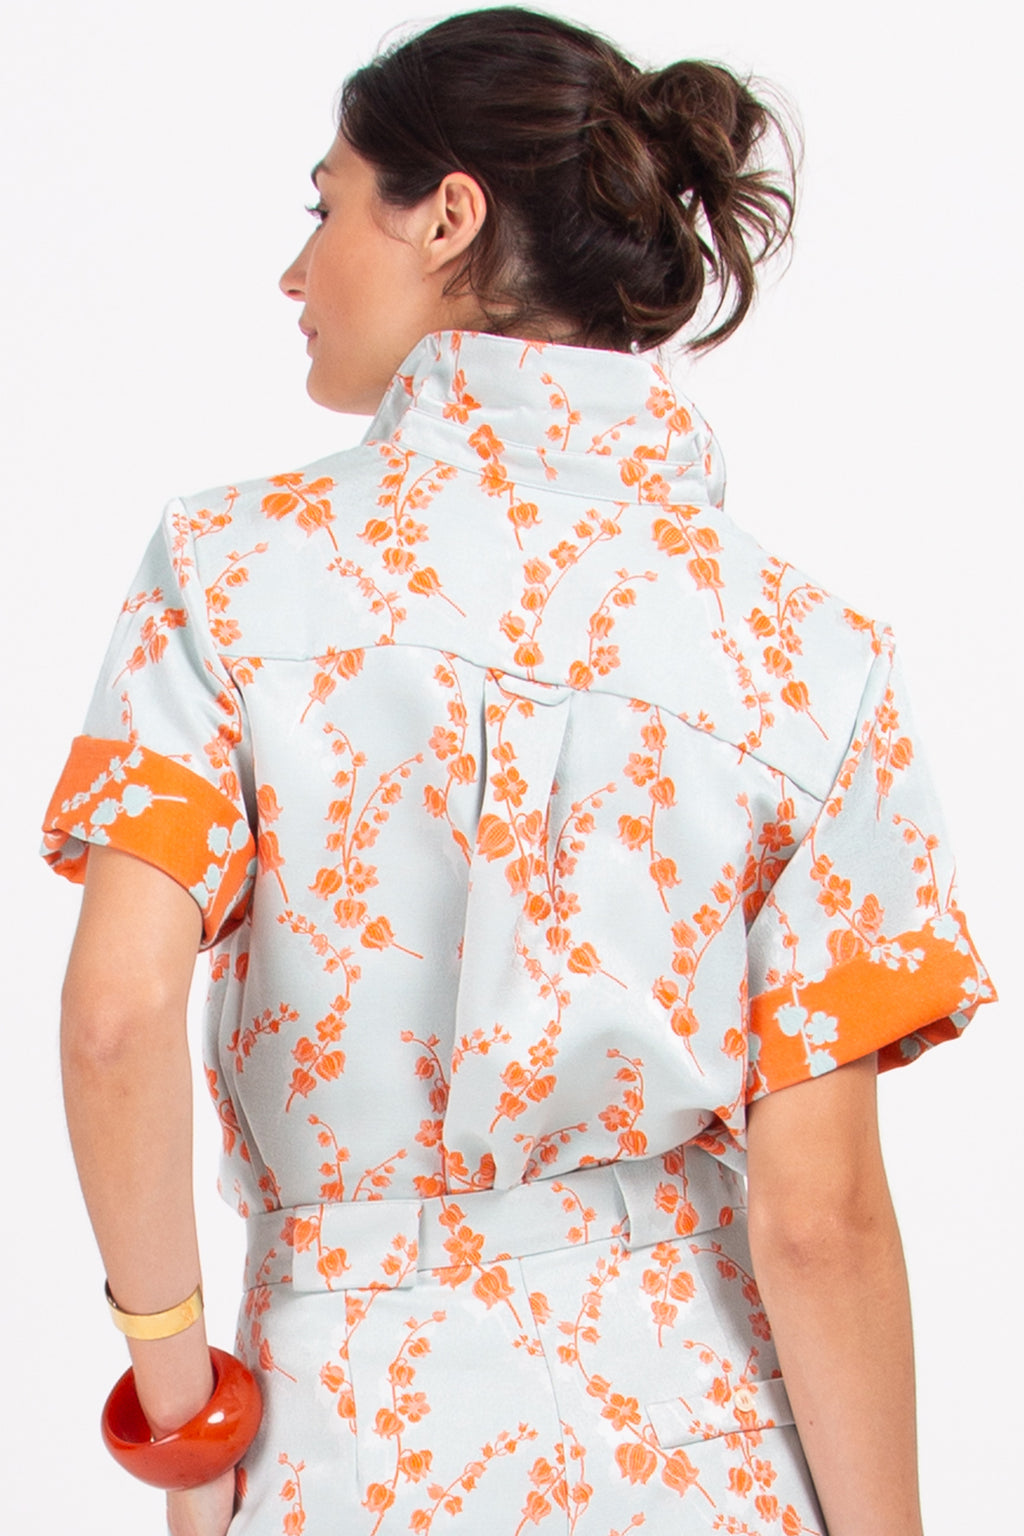 Balma shirt in flower jacquard